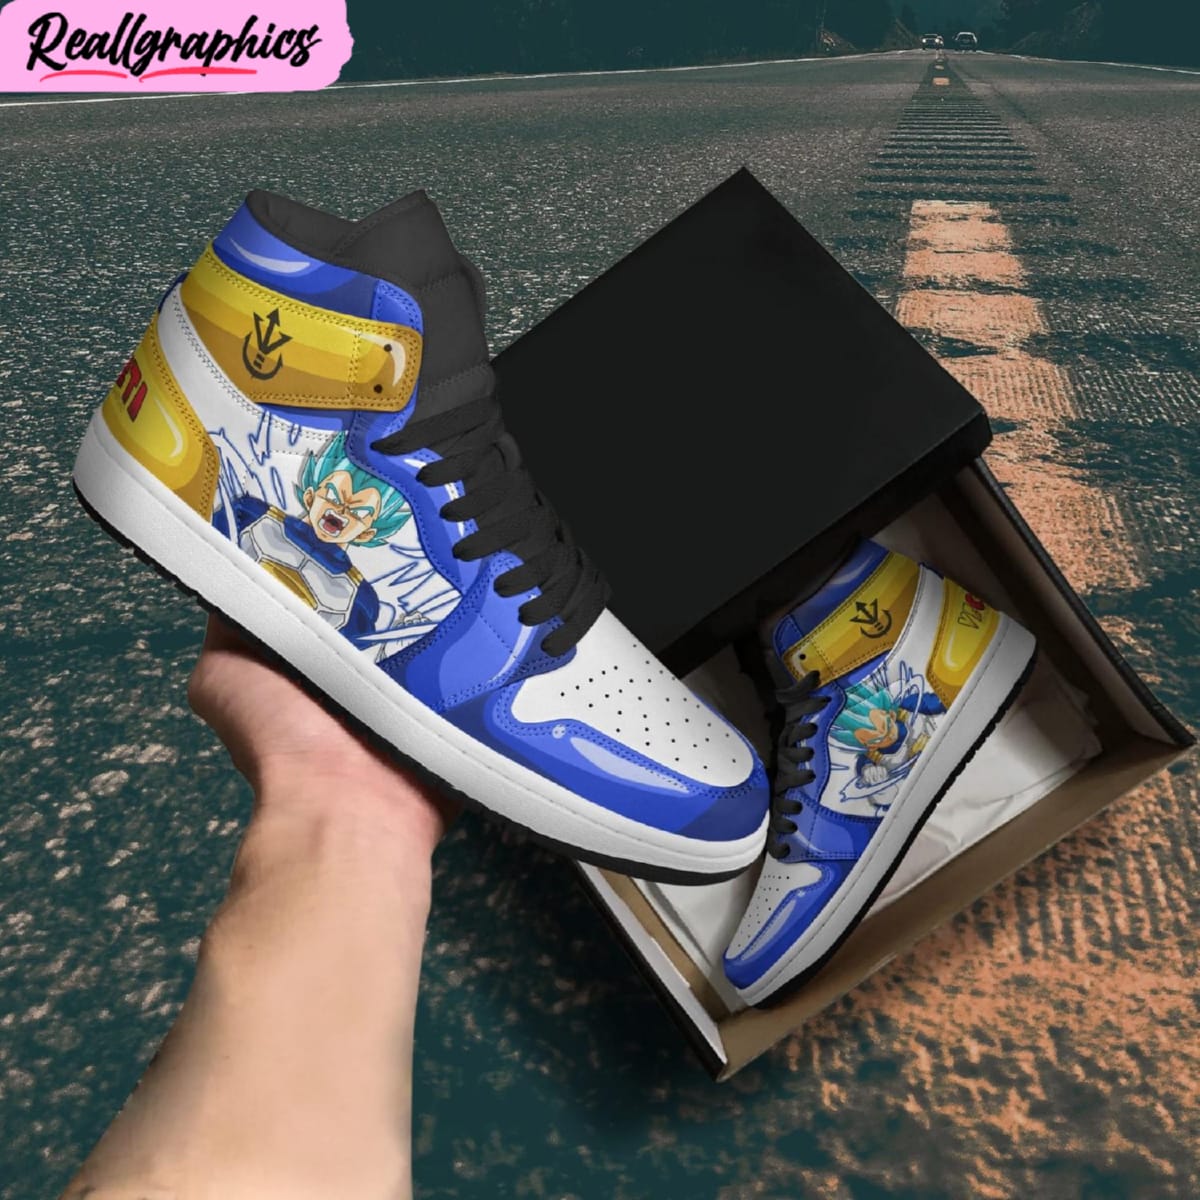 Vegeta Blue Jordan 1 Sneaker Boots, Limited Edition Dragon Ball Anime Shoes  - Reallgraphics